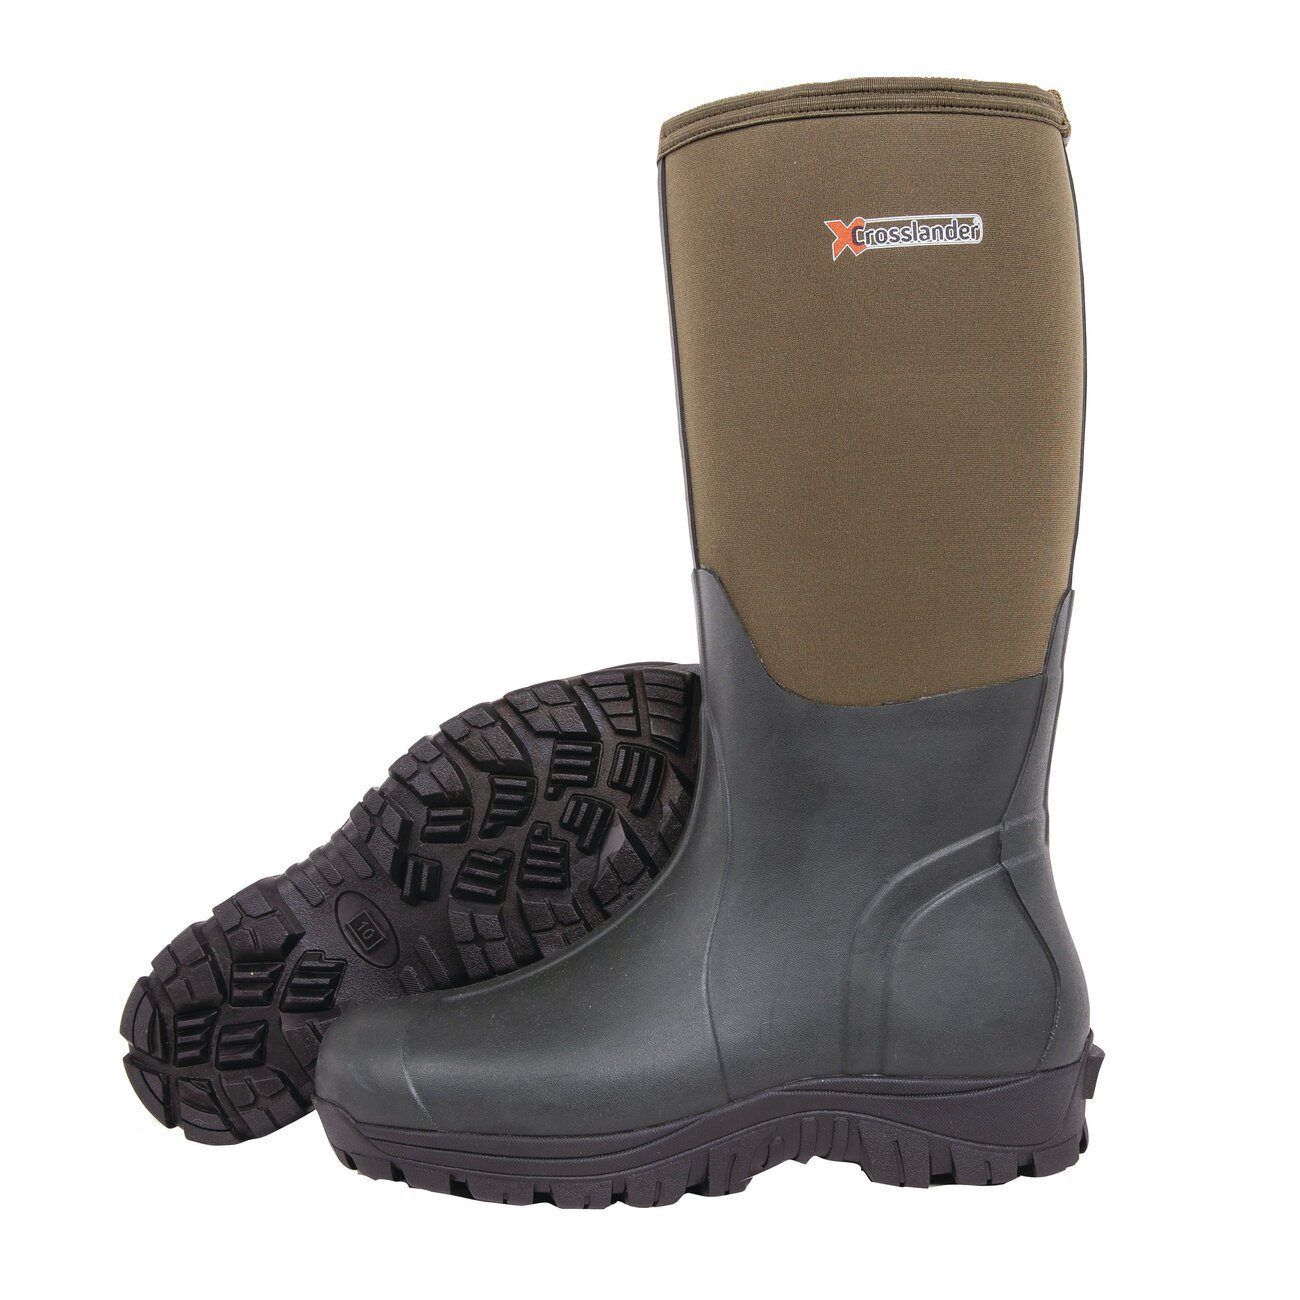 Doloi Boots Reitstiefel Winter Crosslander®